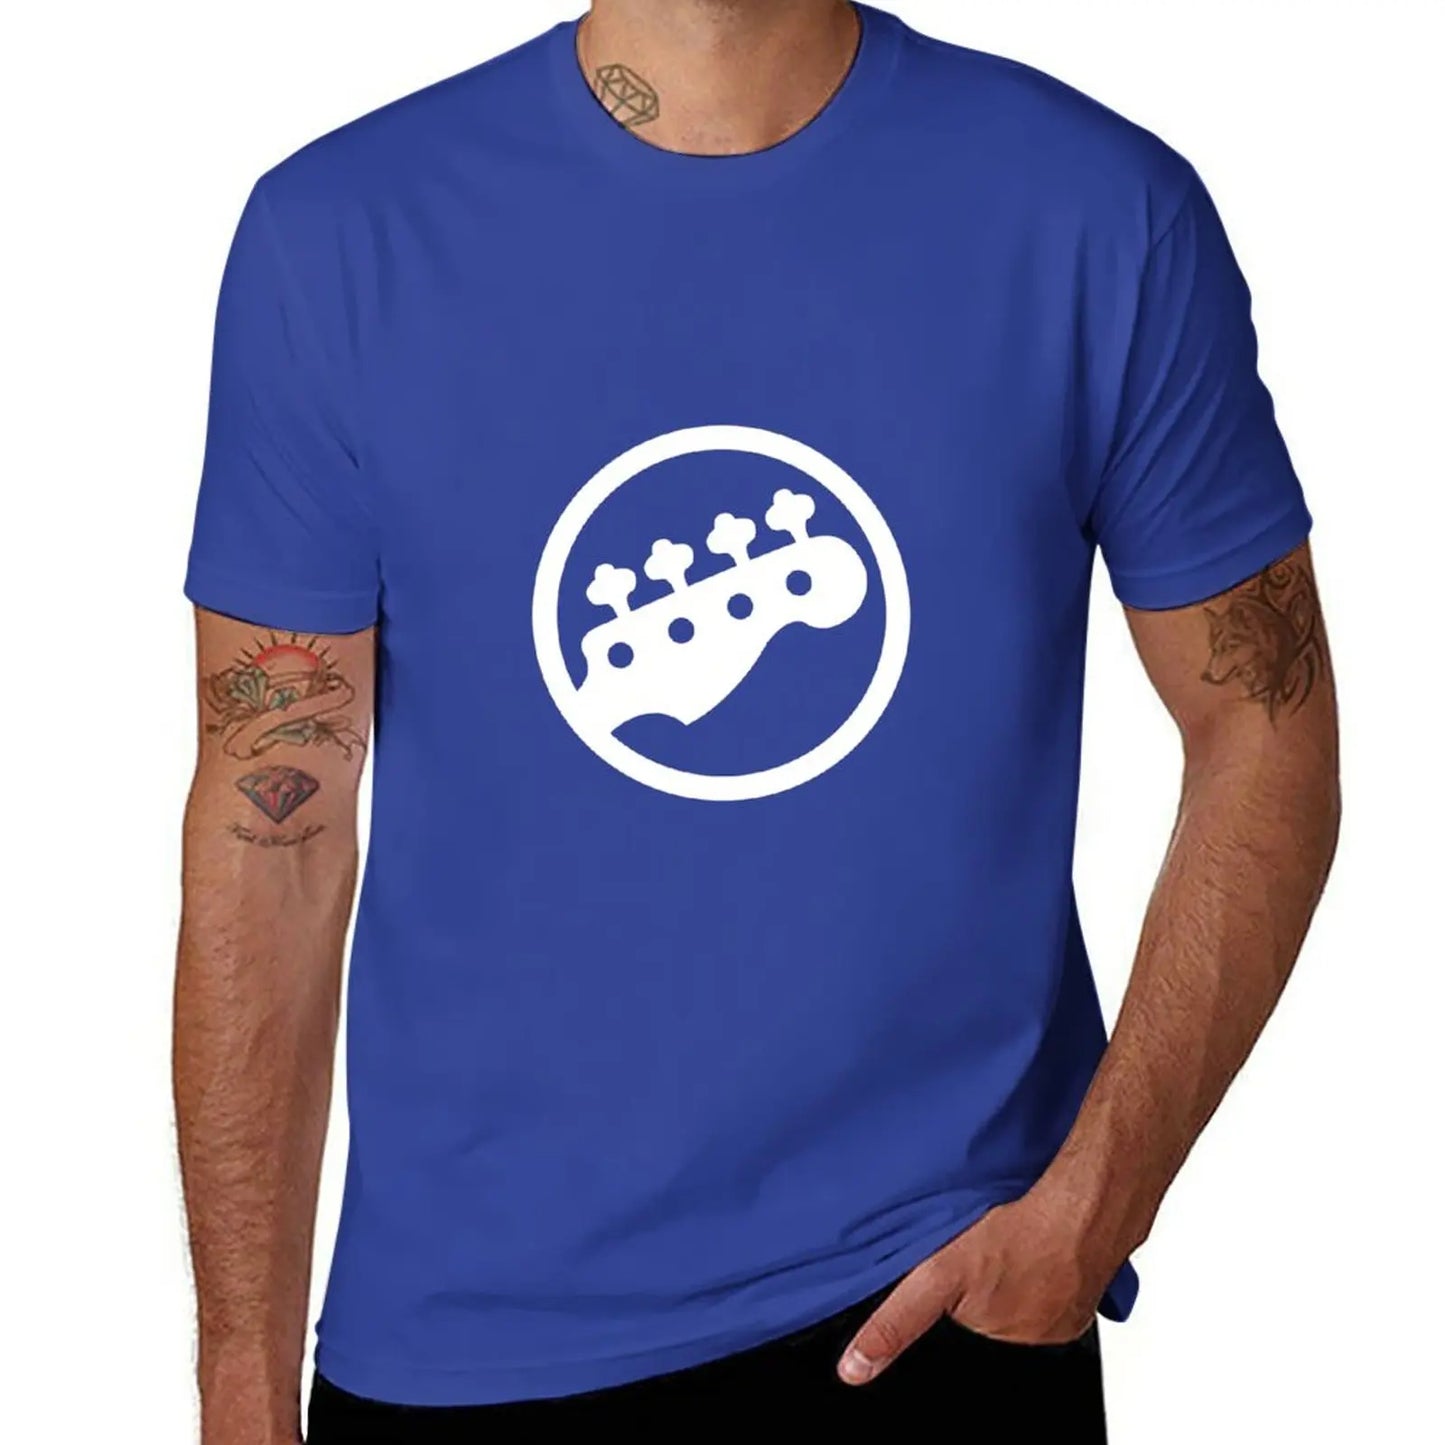 Bass Guitar T-Shirt Bassist Clothing Summer Tops animal print shirt for boys funny t shirts for men - Premium tshirt from Lizard Vigilante - Just $21.99! Shop now at Lizard Vigilante